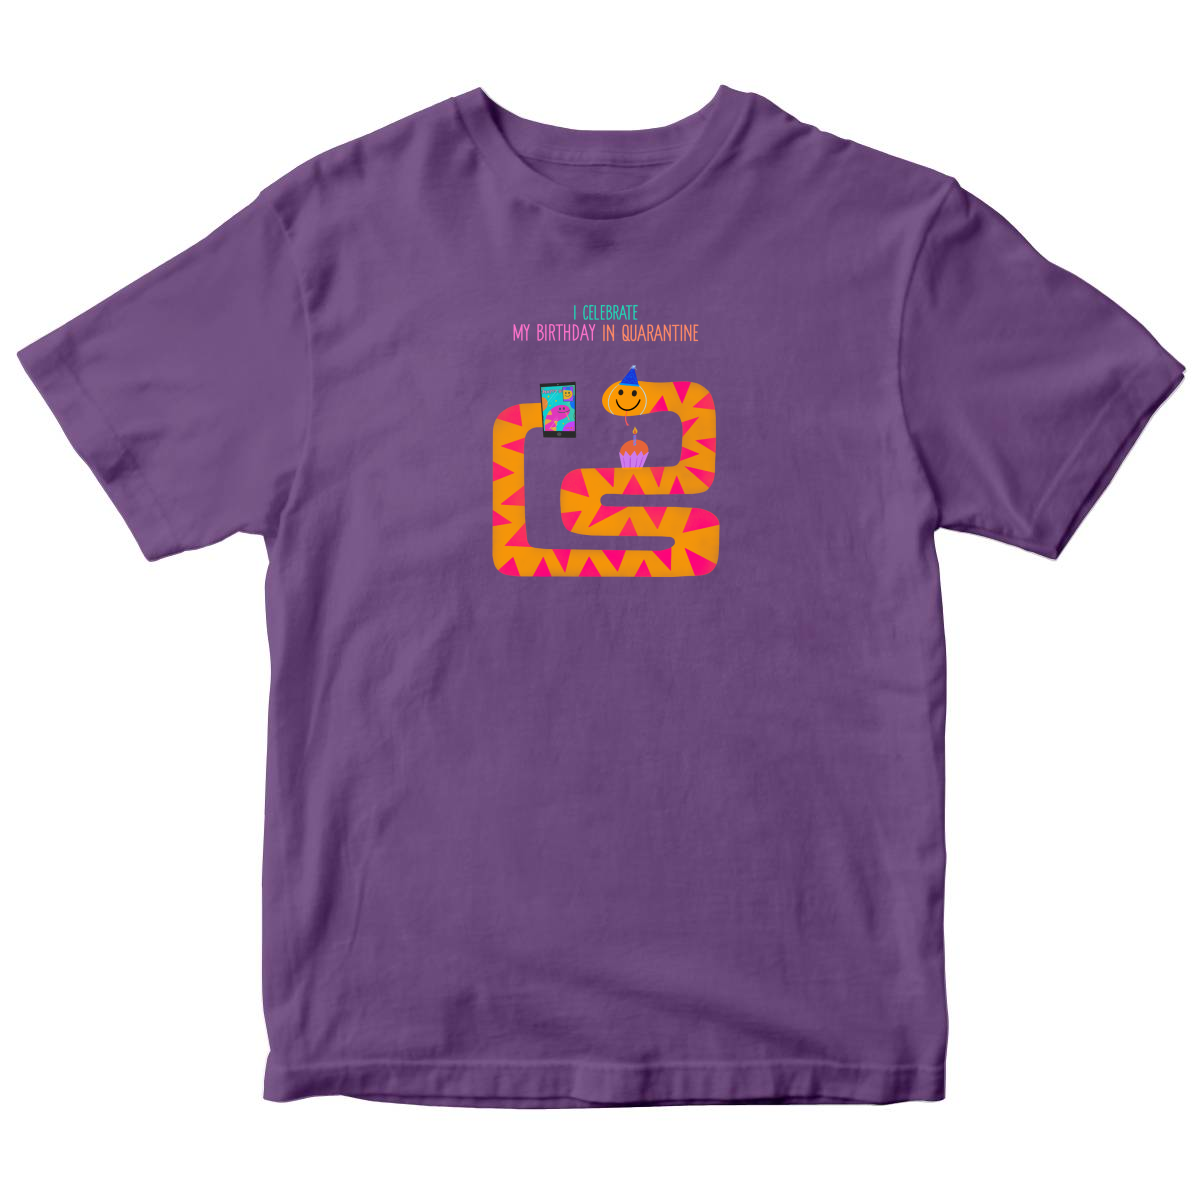 I celebrate my birthday in quarantine Toddler T-shirt | Purple